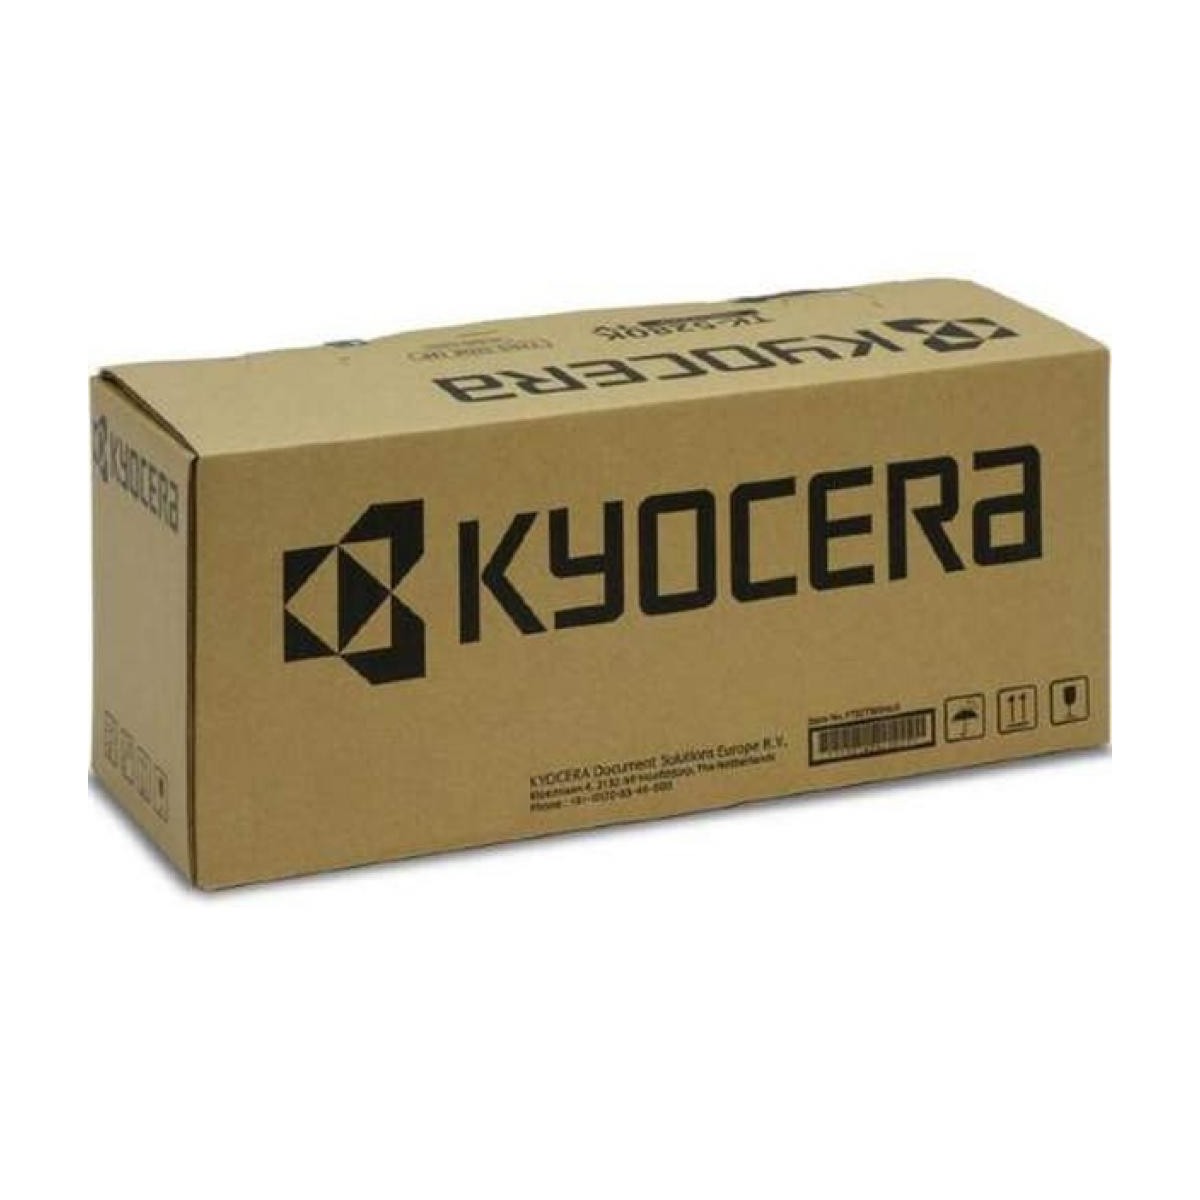 Kyocera MK-15 Maintenance Kit KM-1505/1510/1810